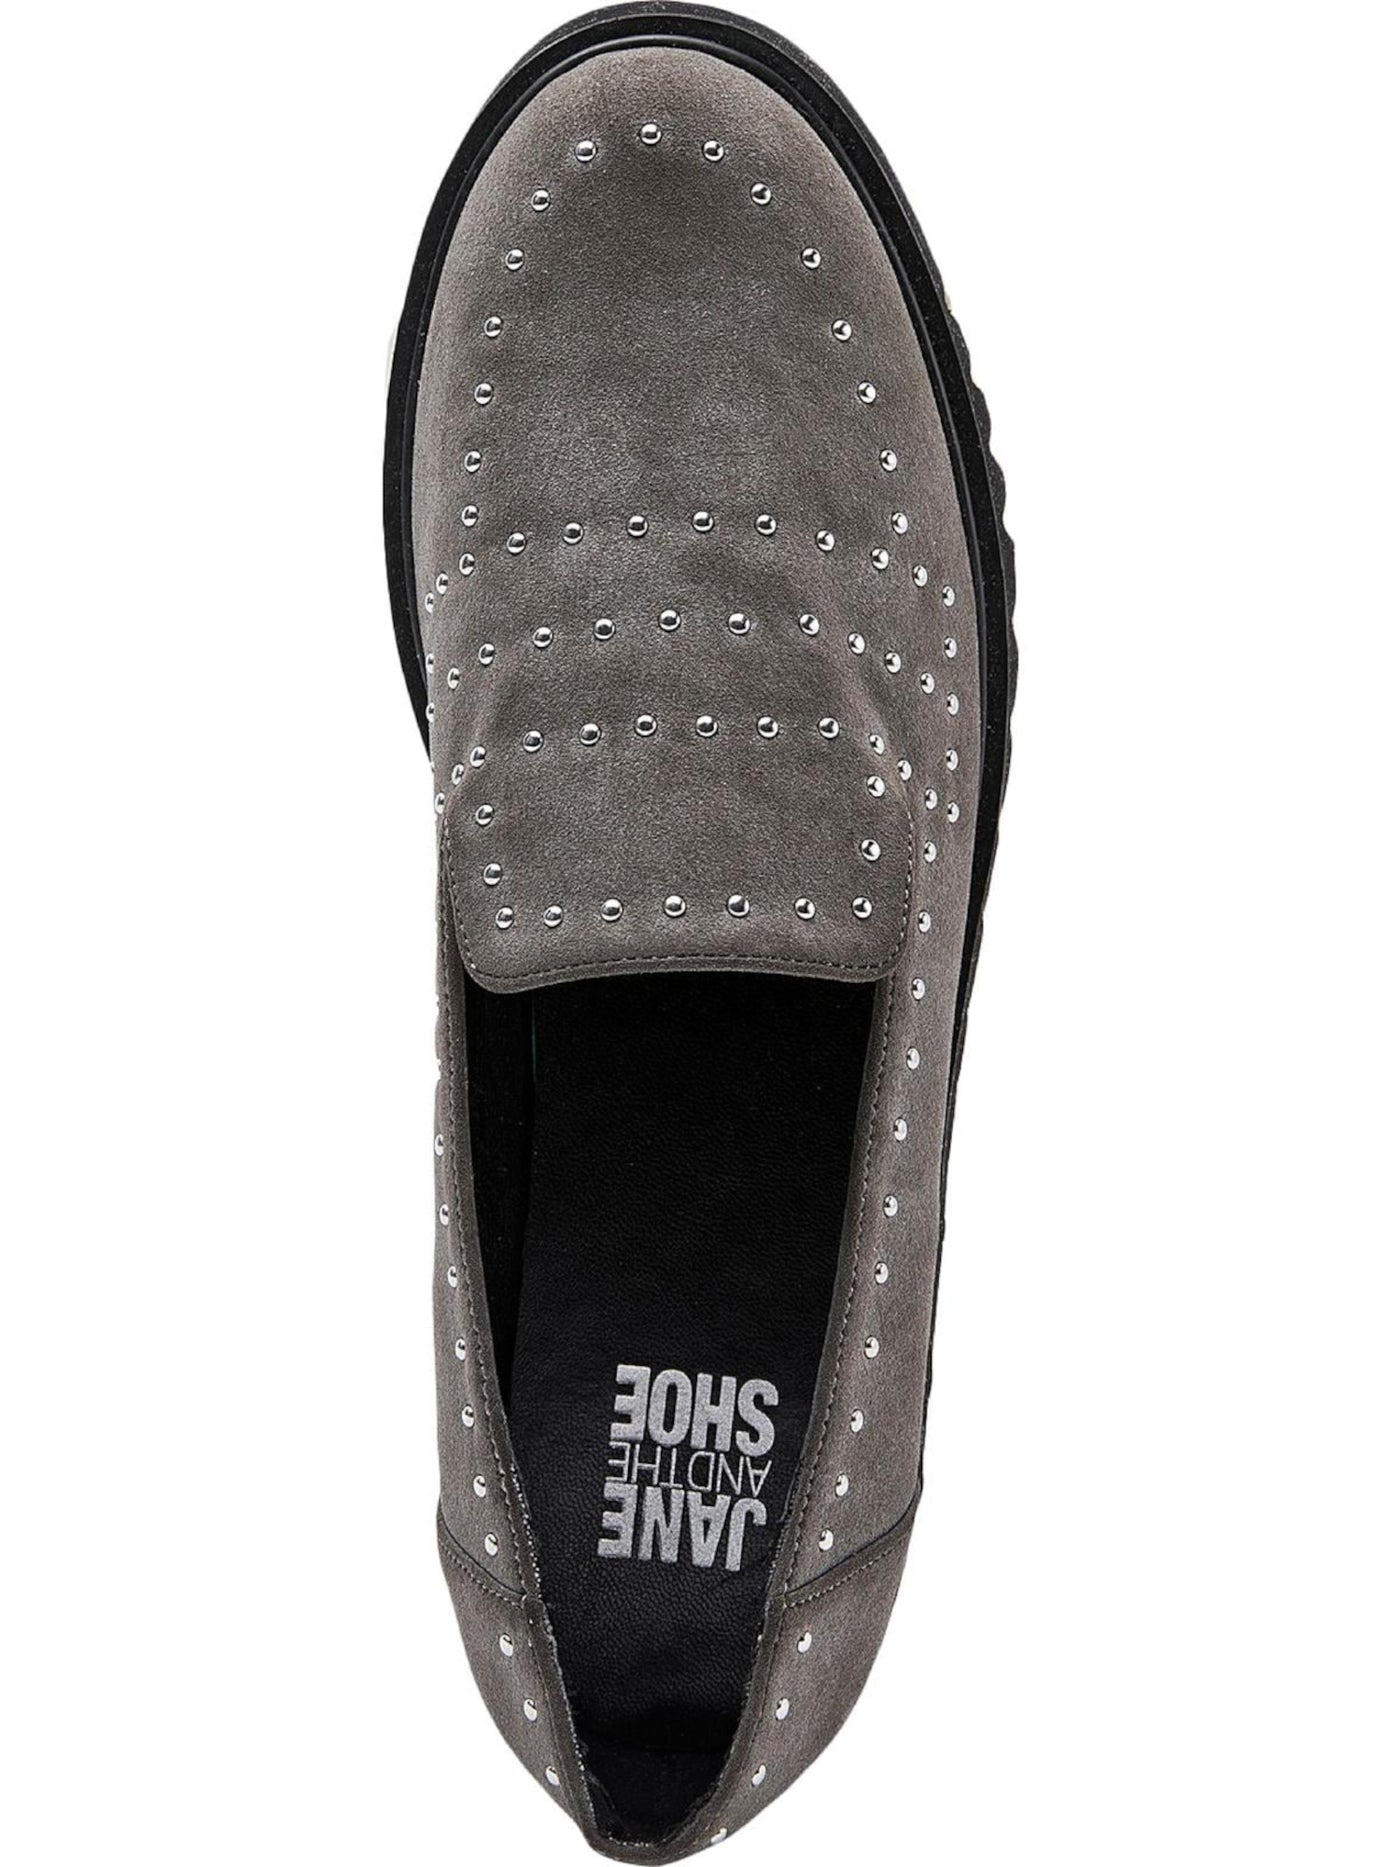 JANE AND THE SHOE Womens Gray Studded Lug Sole Elena Almond Toe Slip On Loafers Shoes